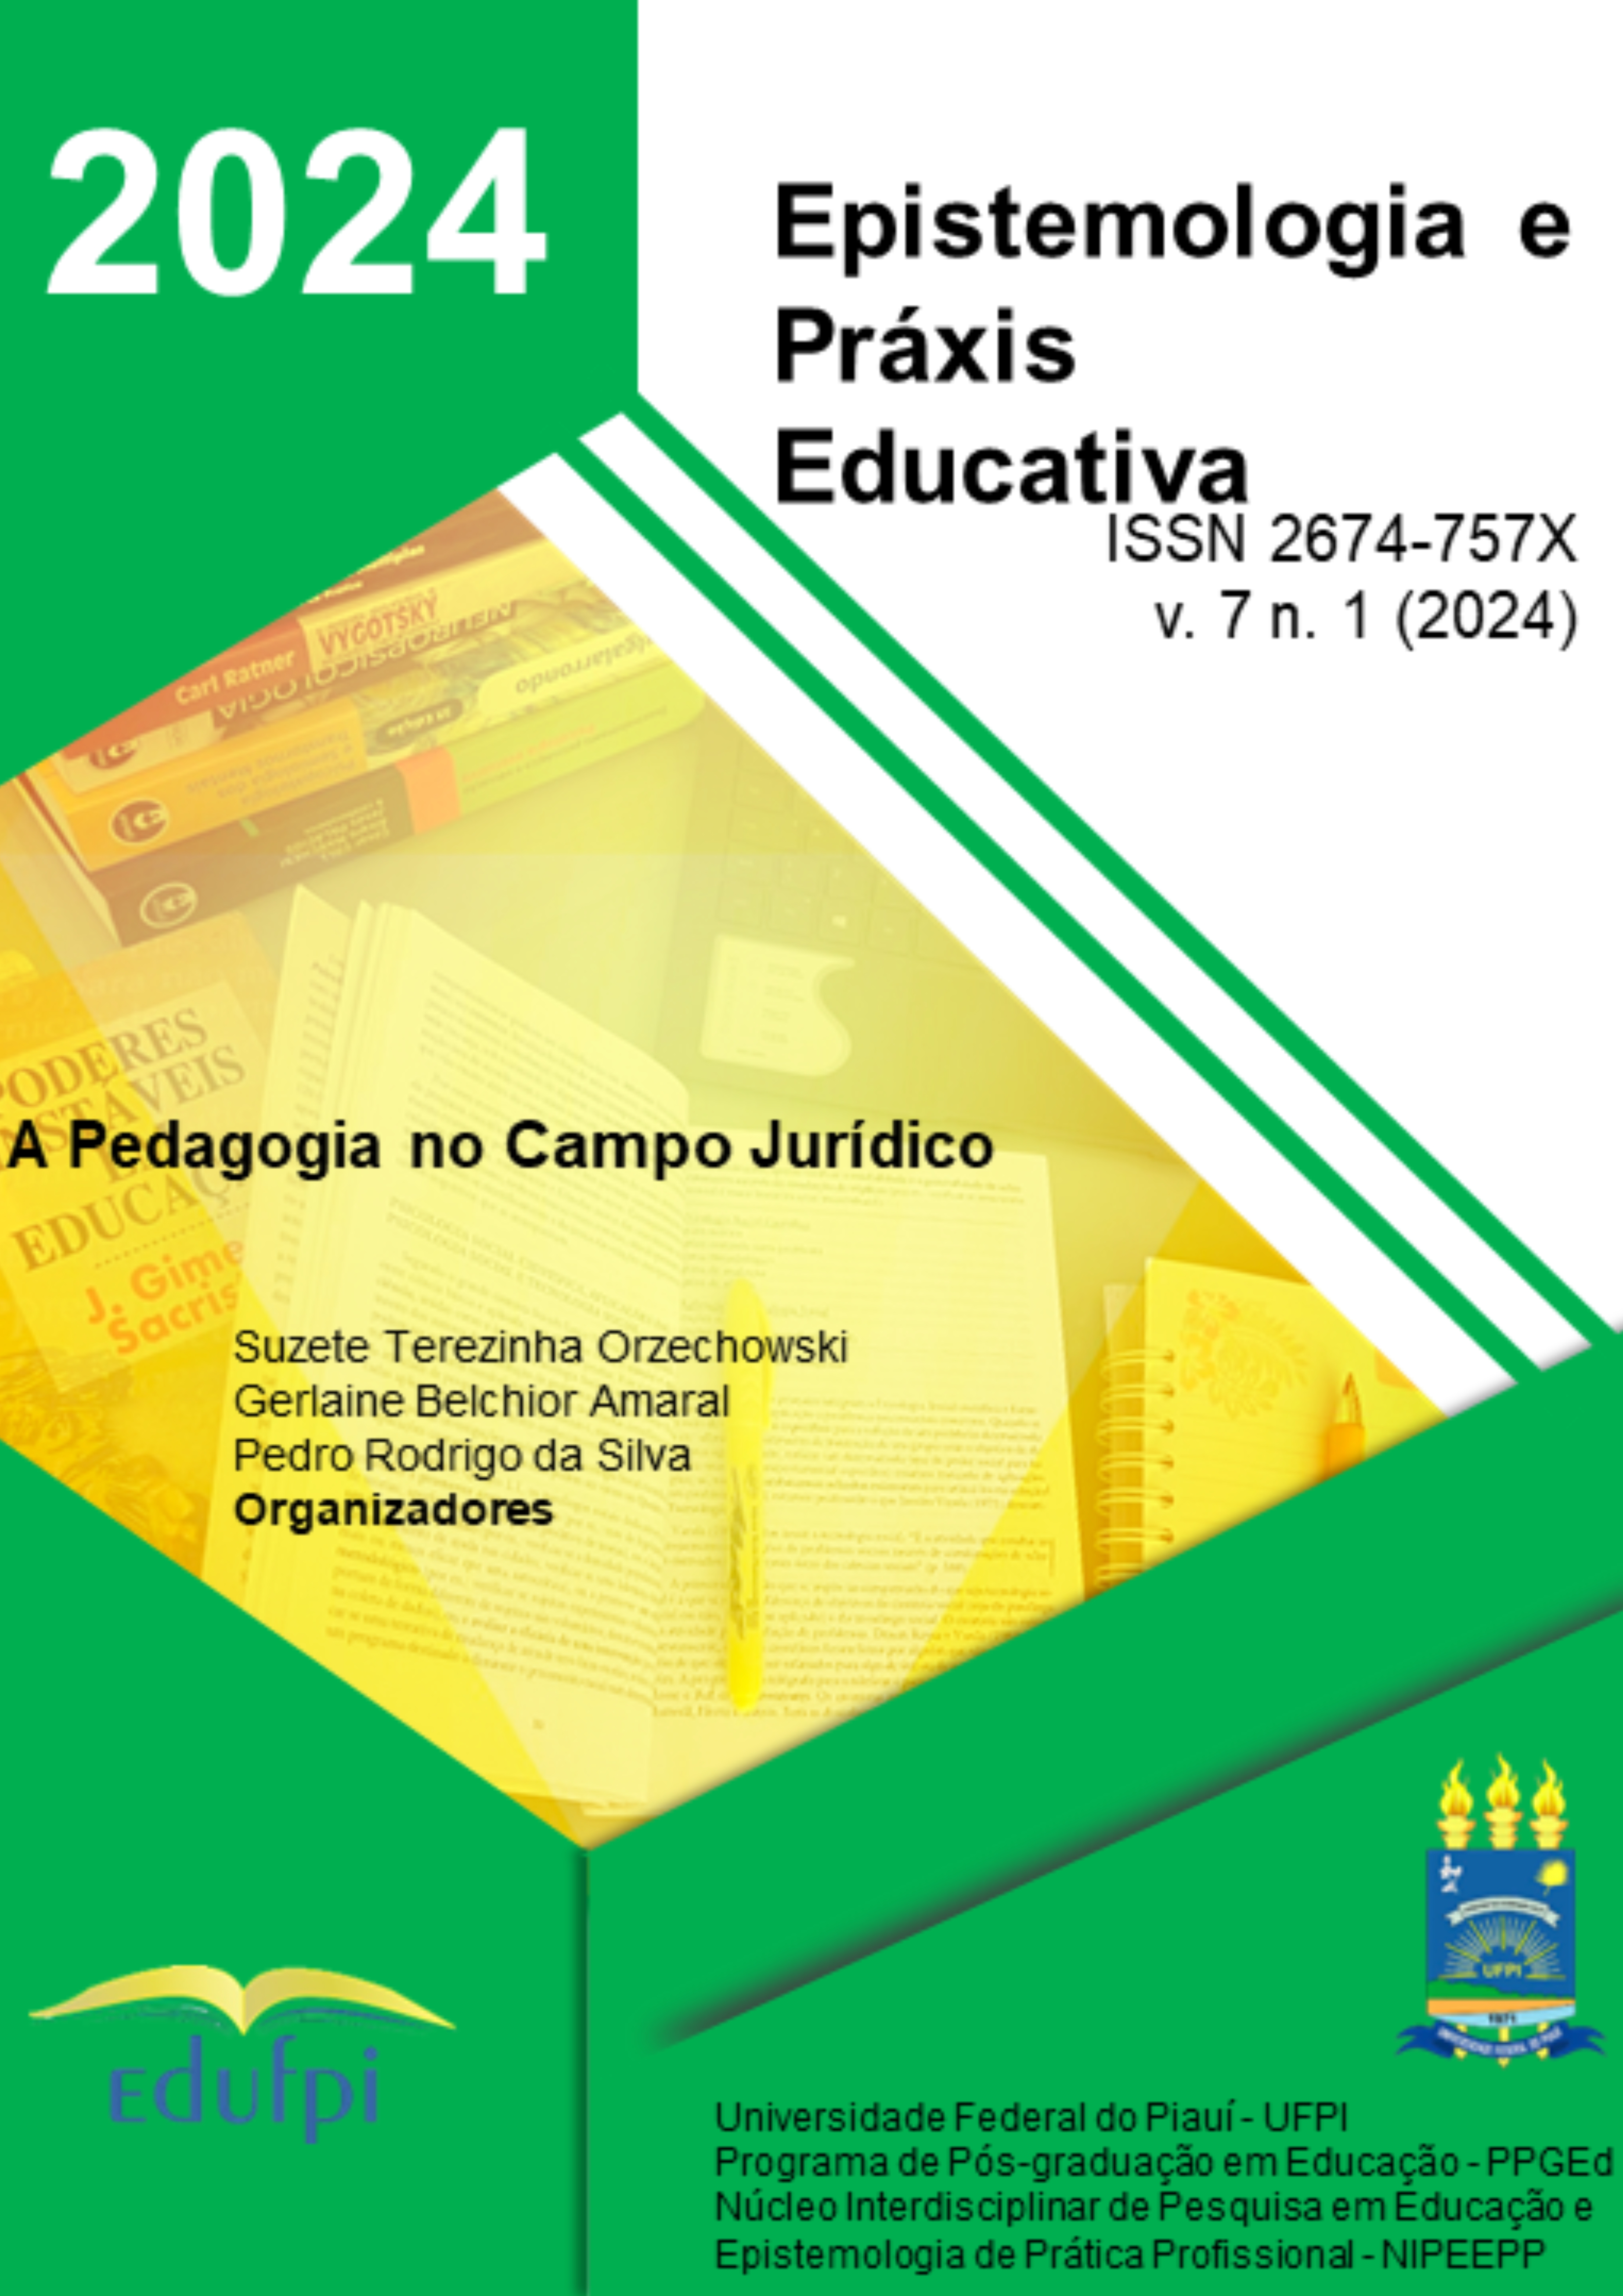 					Visualizar v. 7 n. 1 (2024): Revista Epistemologia e Práxis Educativa - EPEduc, Piauí, eISSN: 2674-757X
				